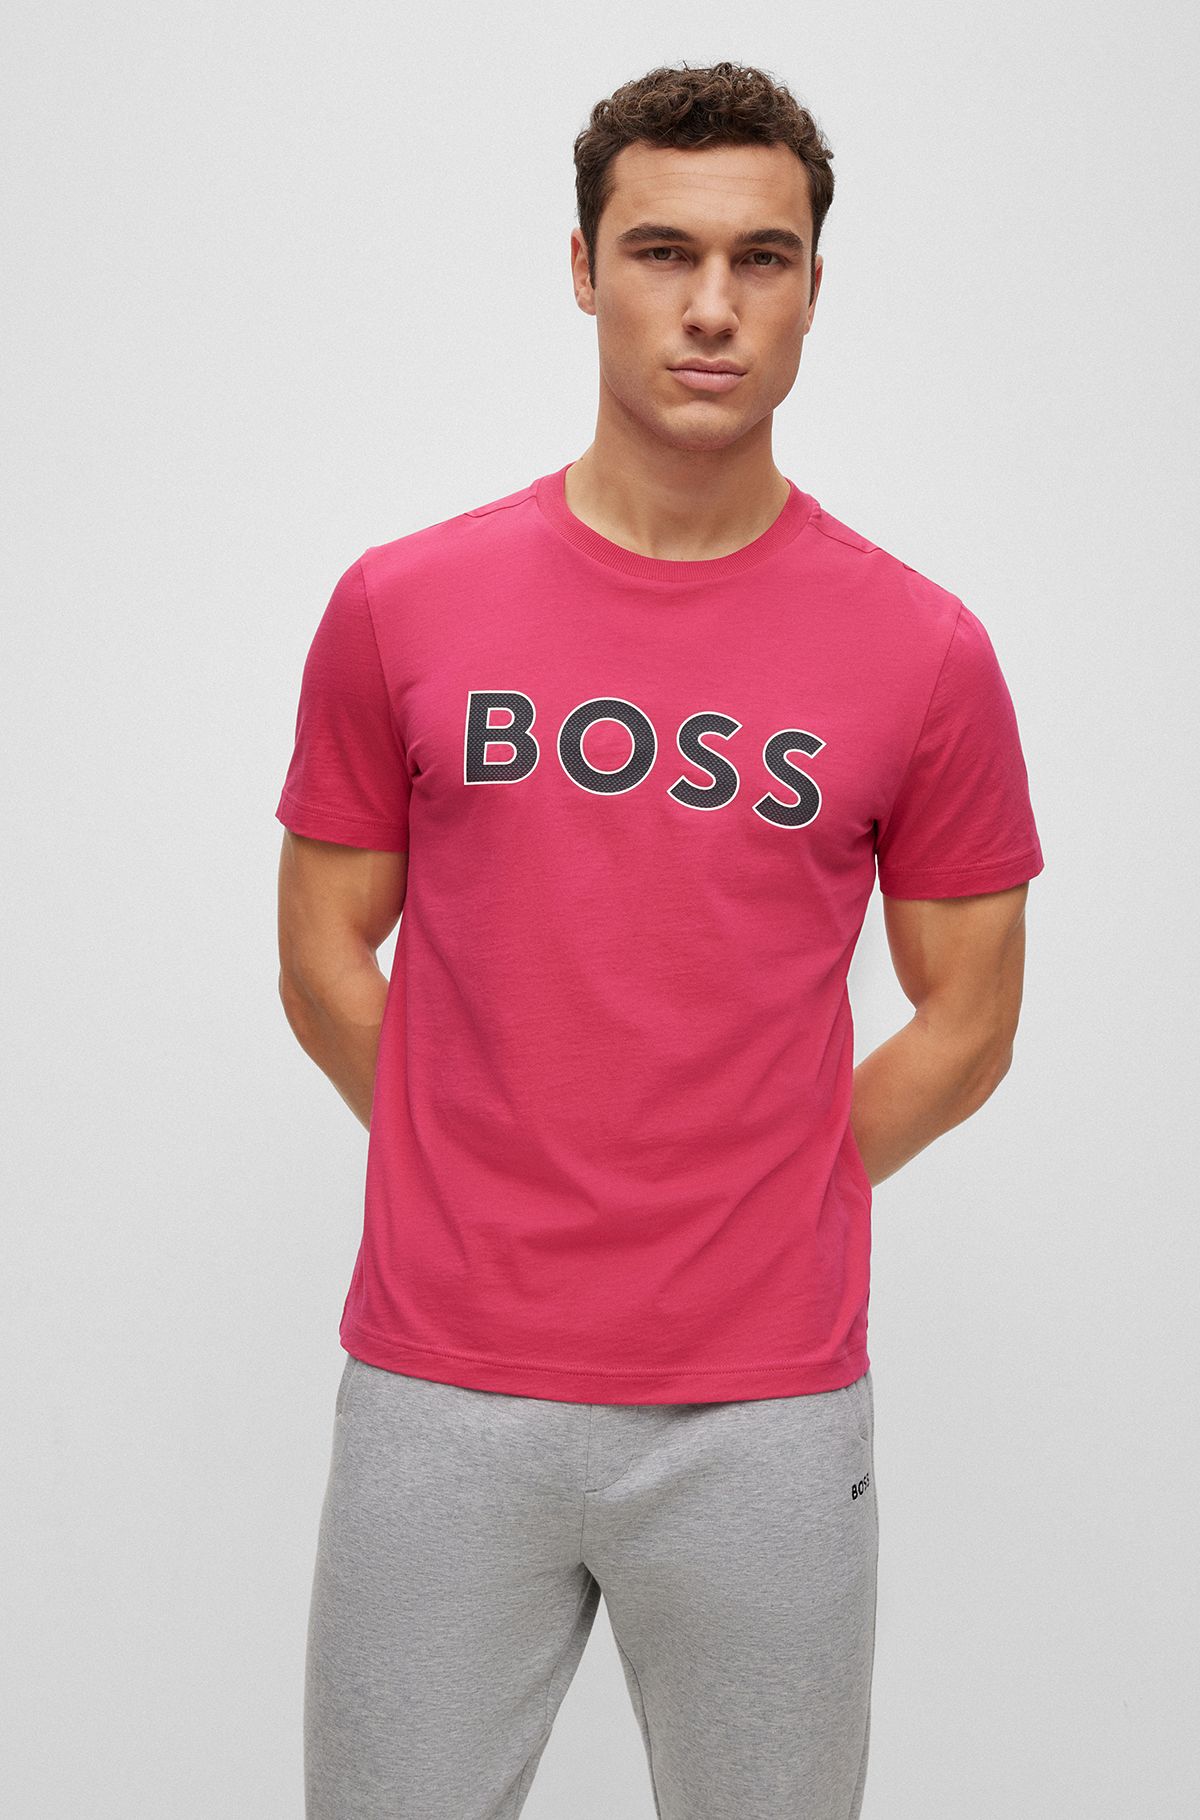 Stylish Pink T-Shirts for Men by HUGO BOSS | BOSS Men